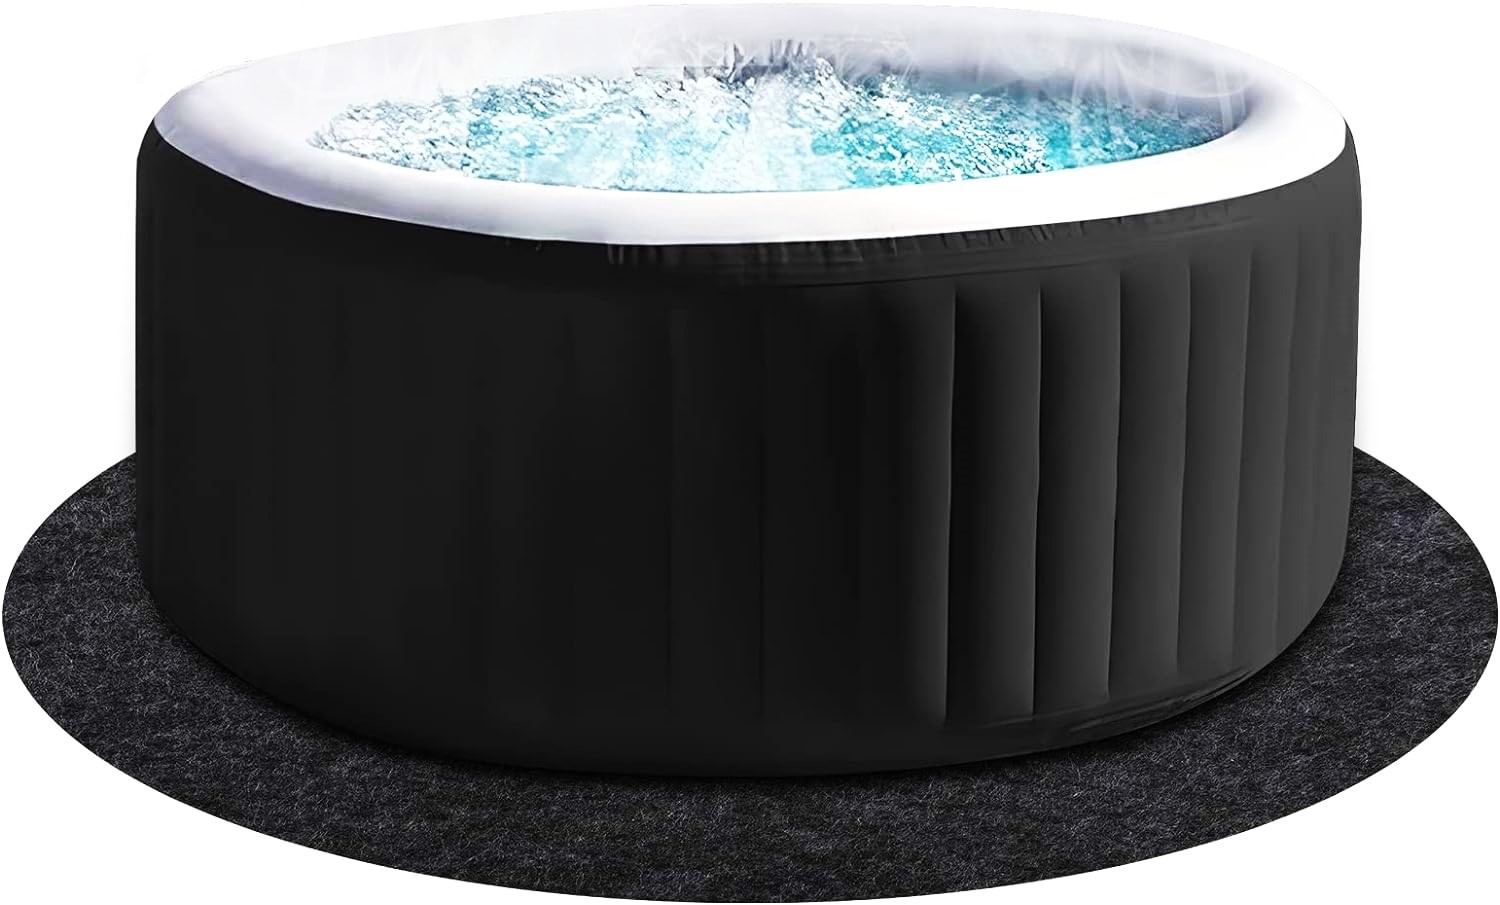 Novwang Hot Tub Mat — The Sturdiest and Waterproof